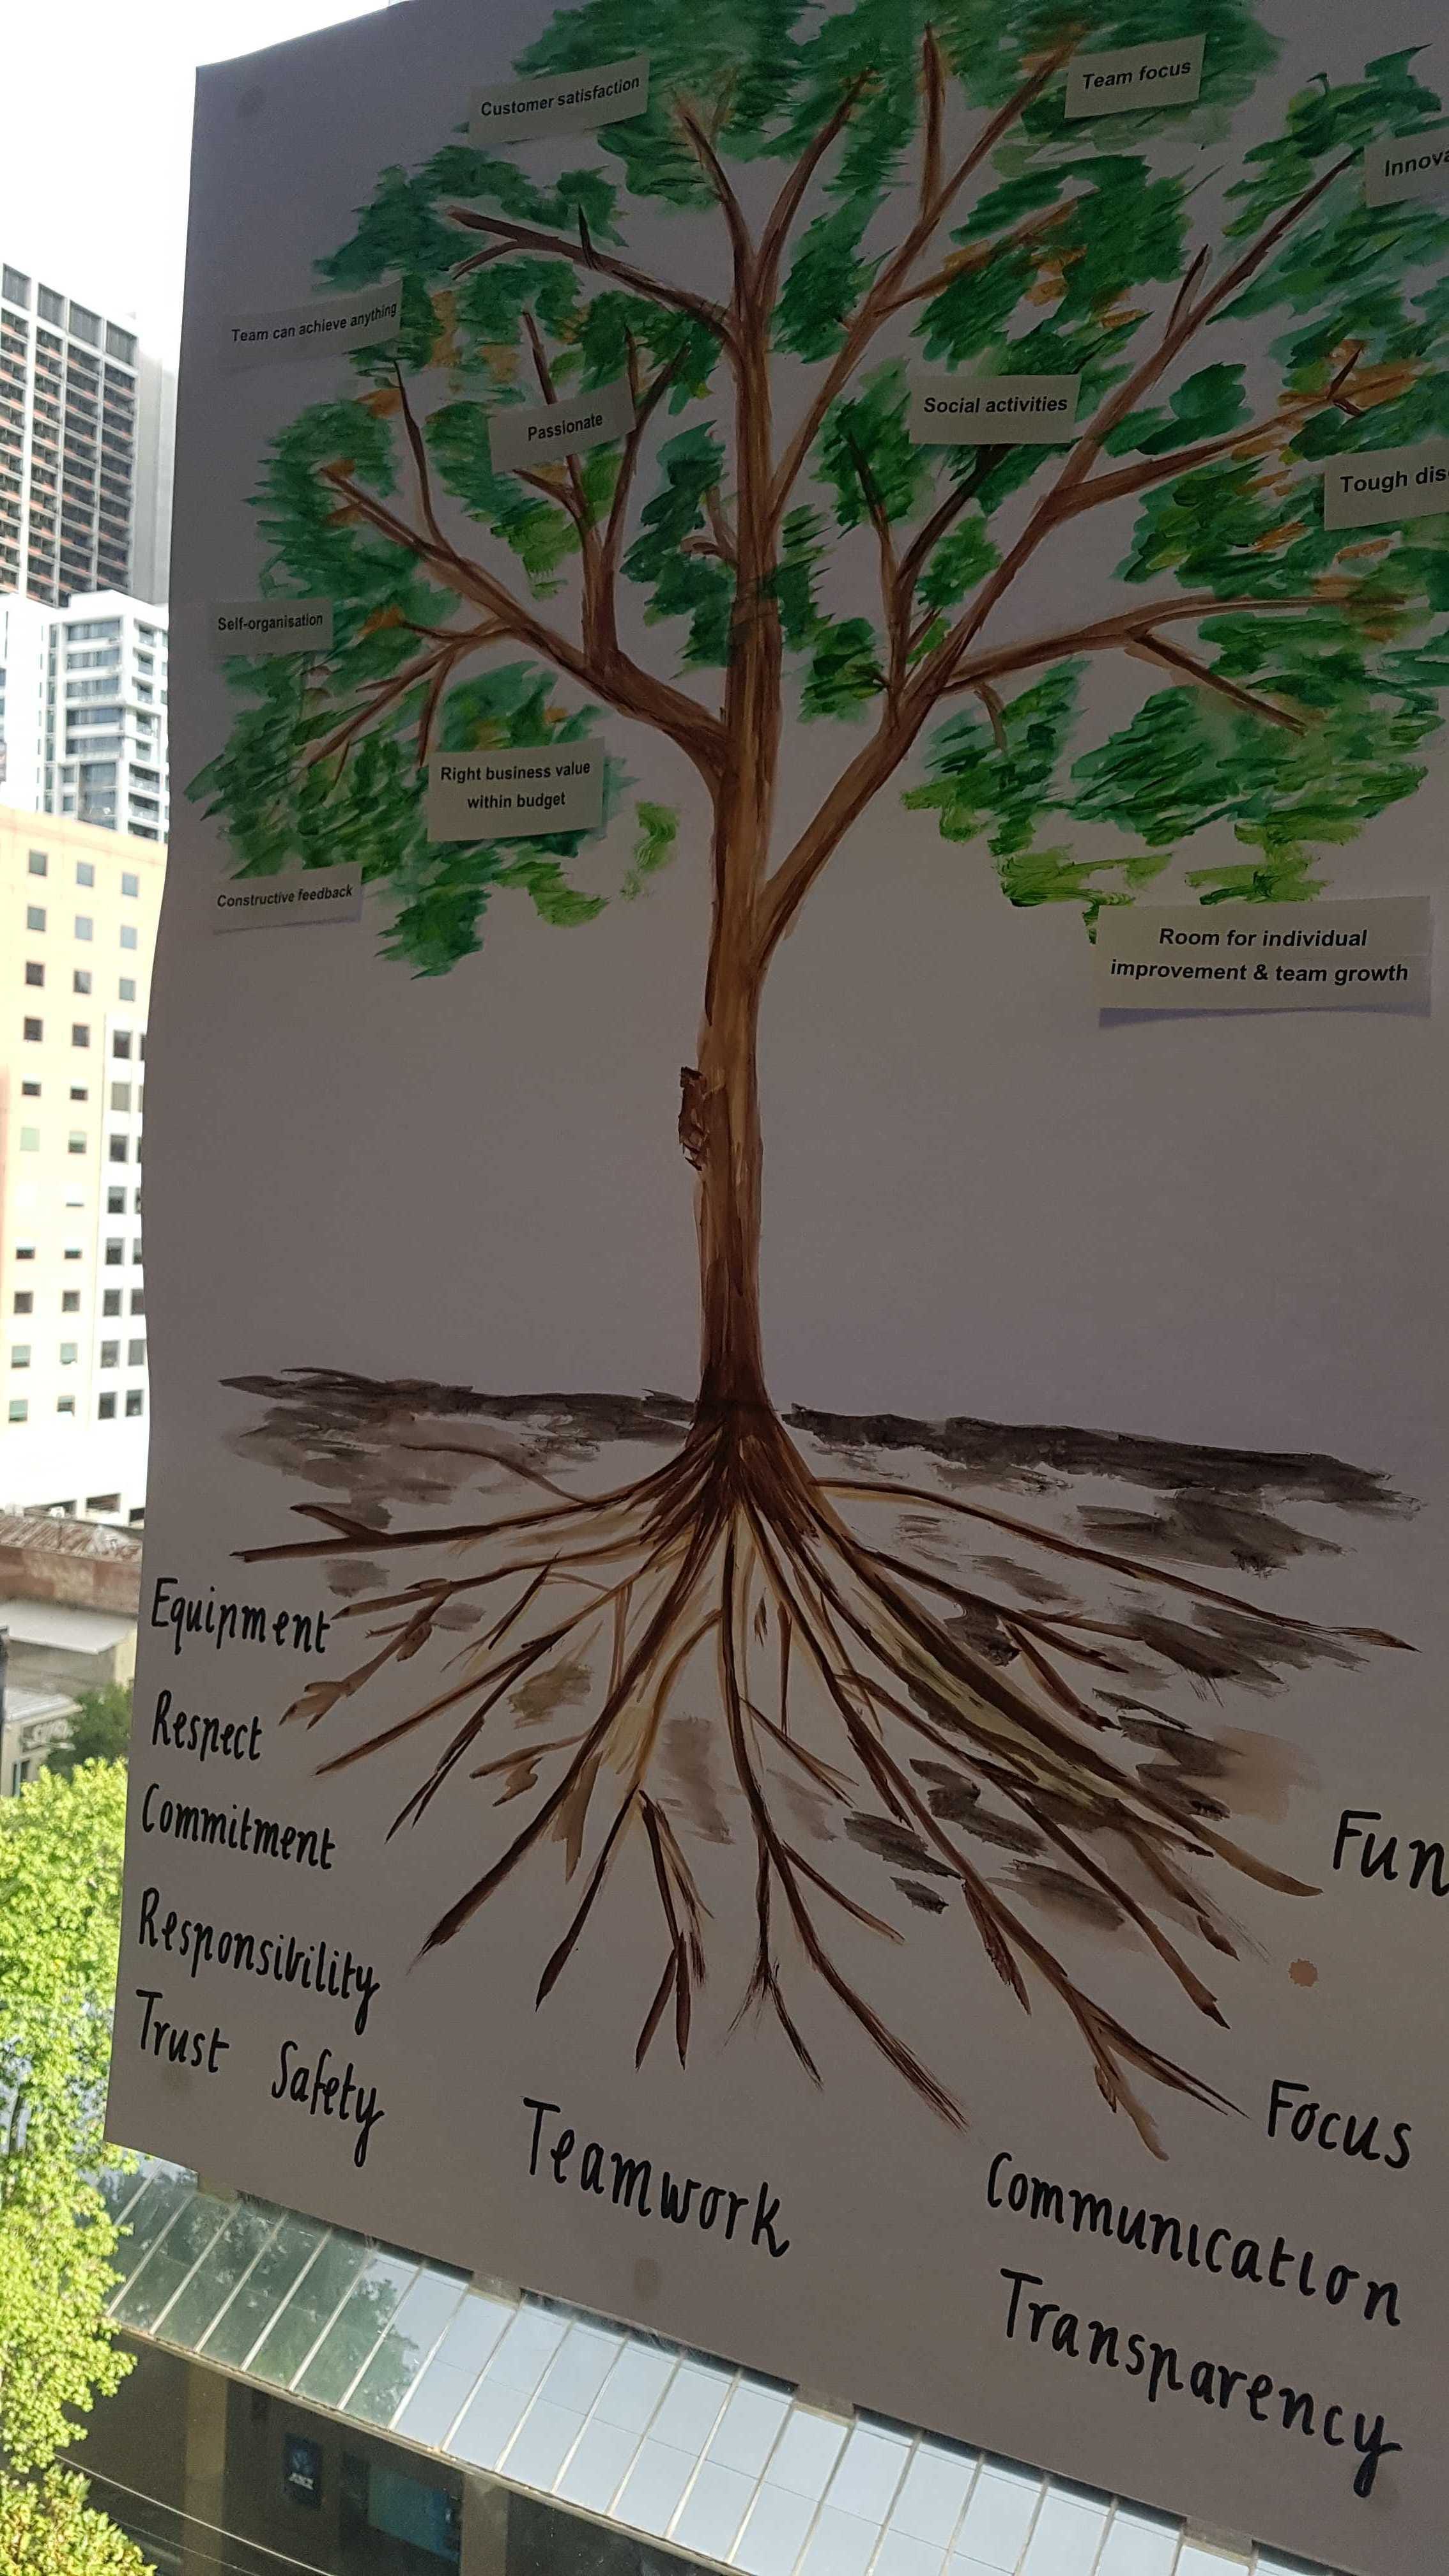 Team values visualised as a tree by [Anastasia Foulidis](https://cdn.hashnode.com/res/hashnode/image/upload/v1628469406703/51Uo3mYlZ.html)